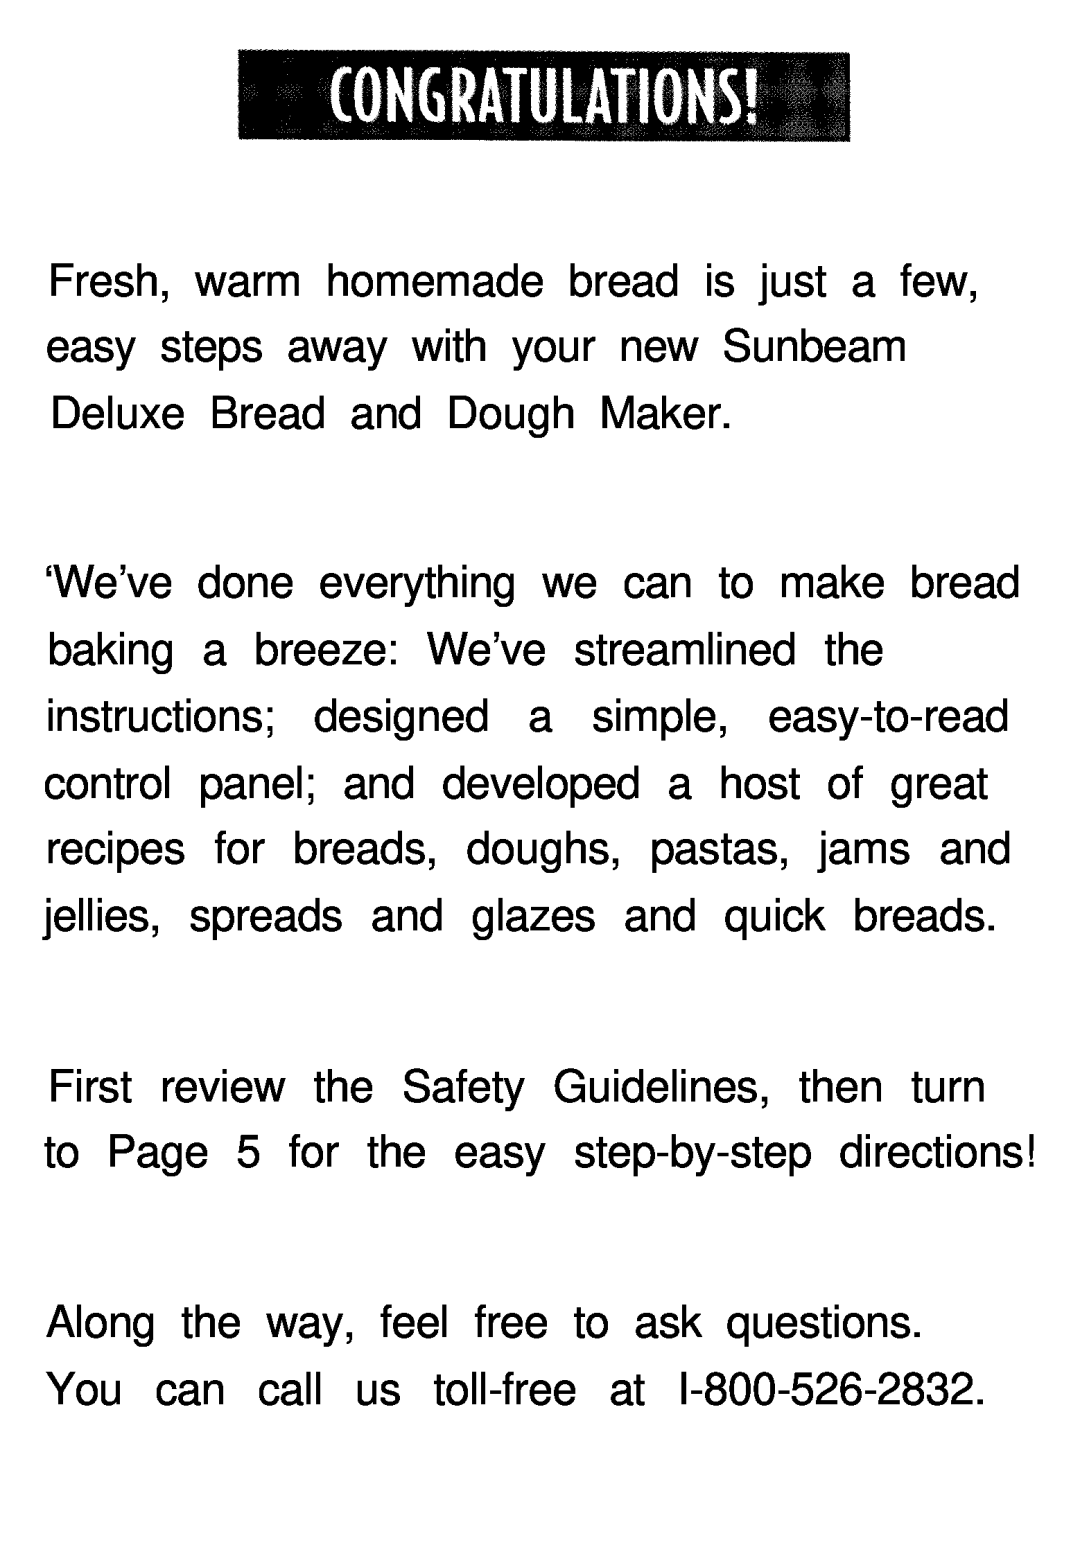 Sunbeam Deluxe 2-Pound Bread & Dough Maker manual 